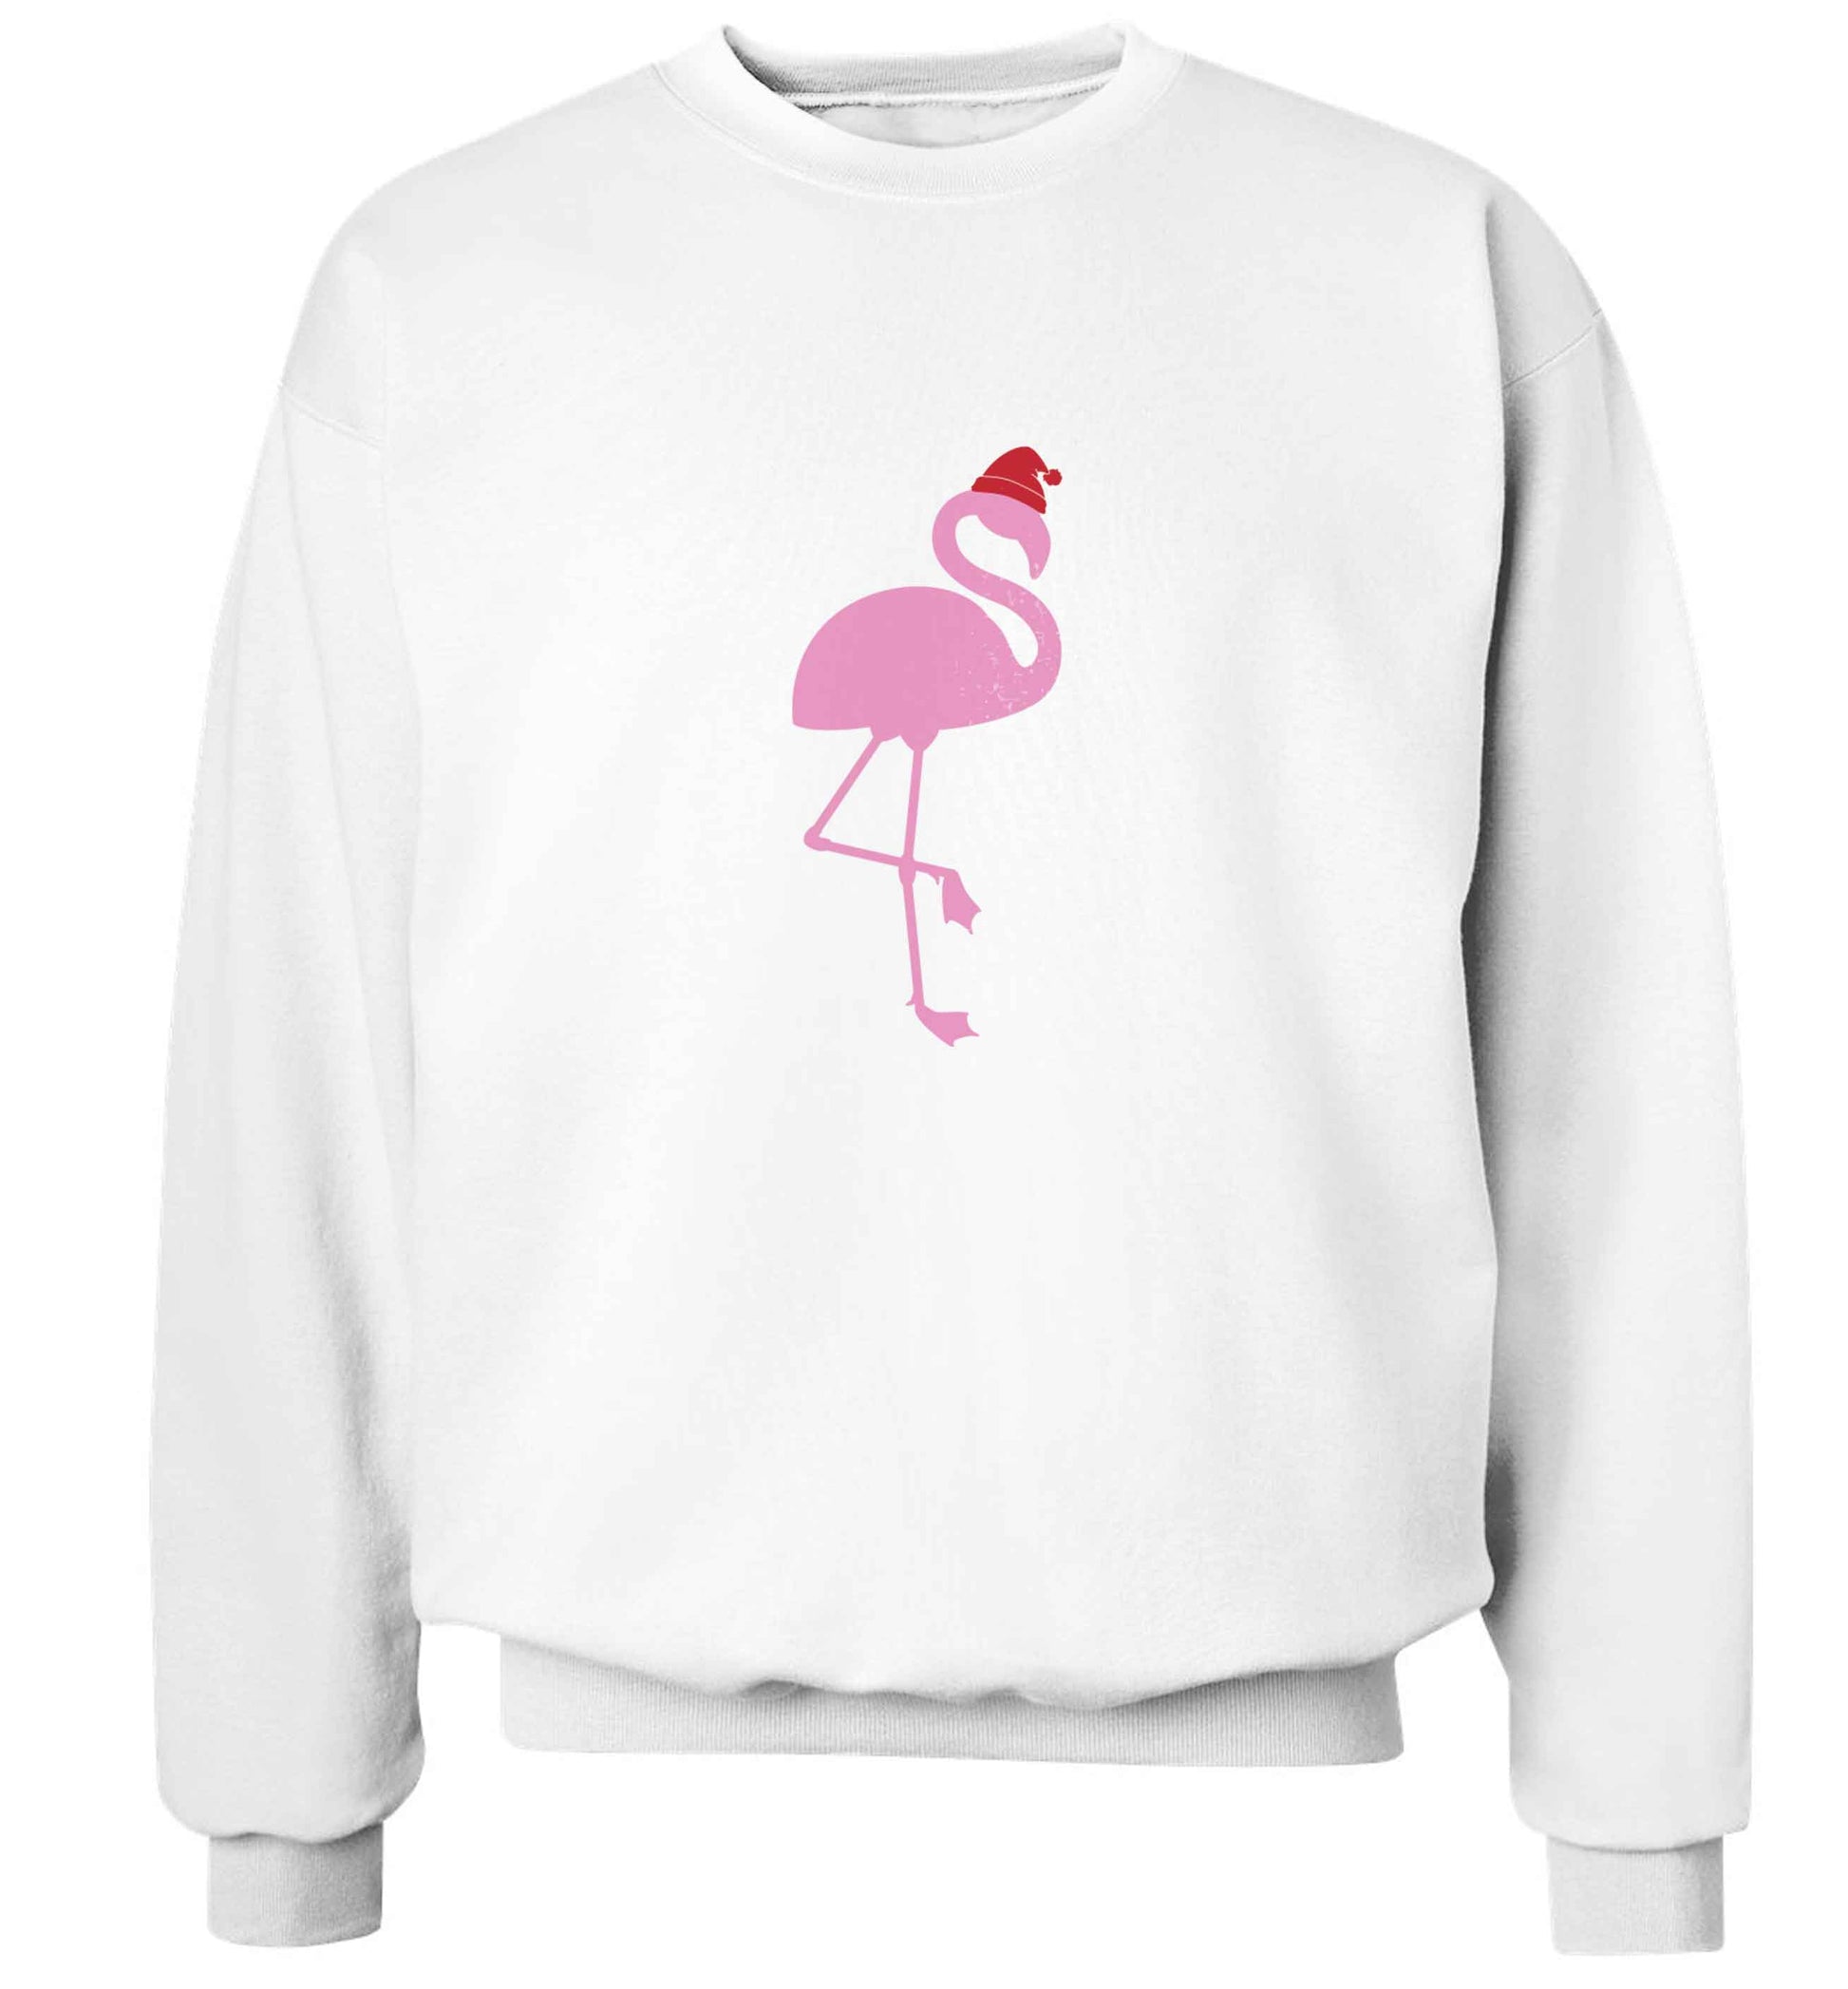 Pink flamingo santa adult's unisex white sweater 2XL